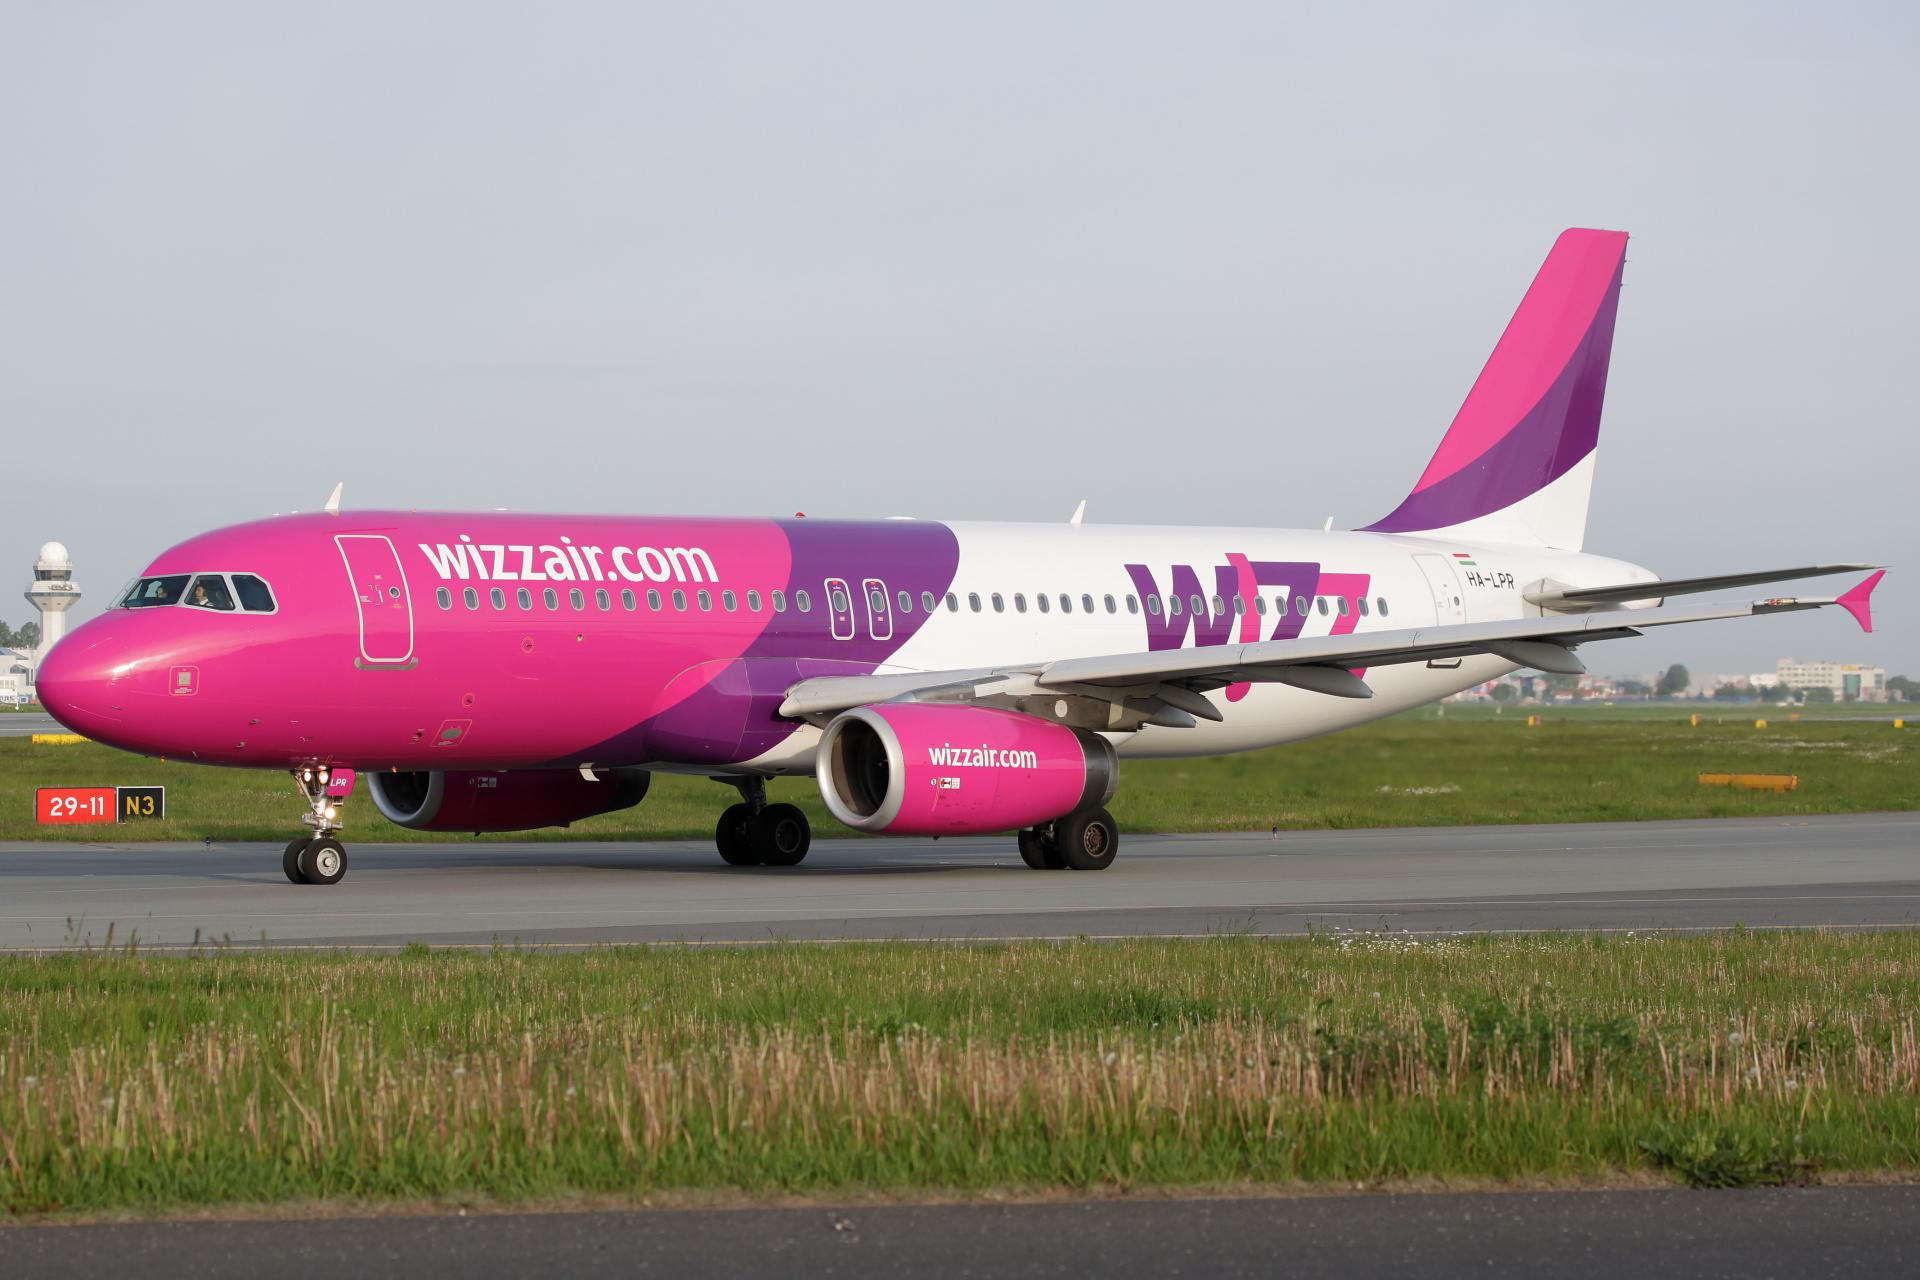 HA-LPR (Aircraft » EPWA Spotting » Airbus A320-200 » Wizz Air)